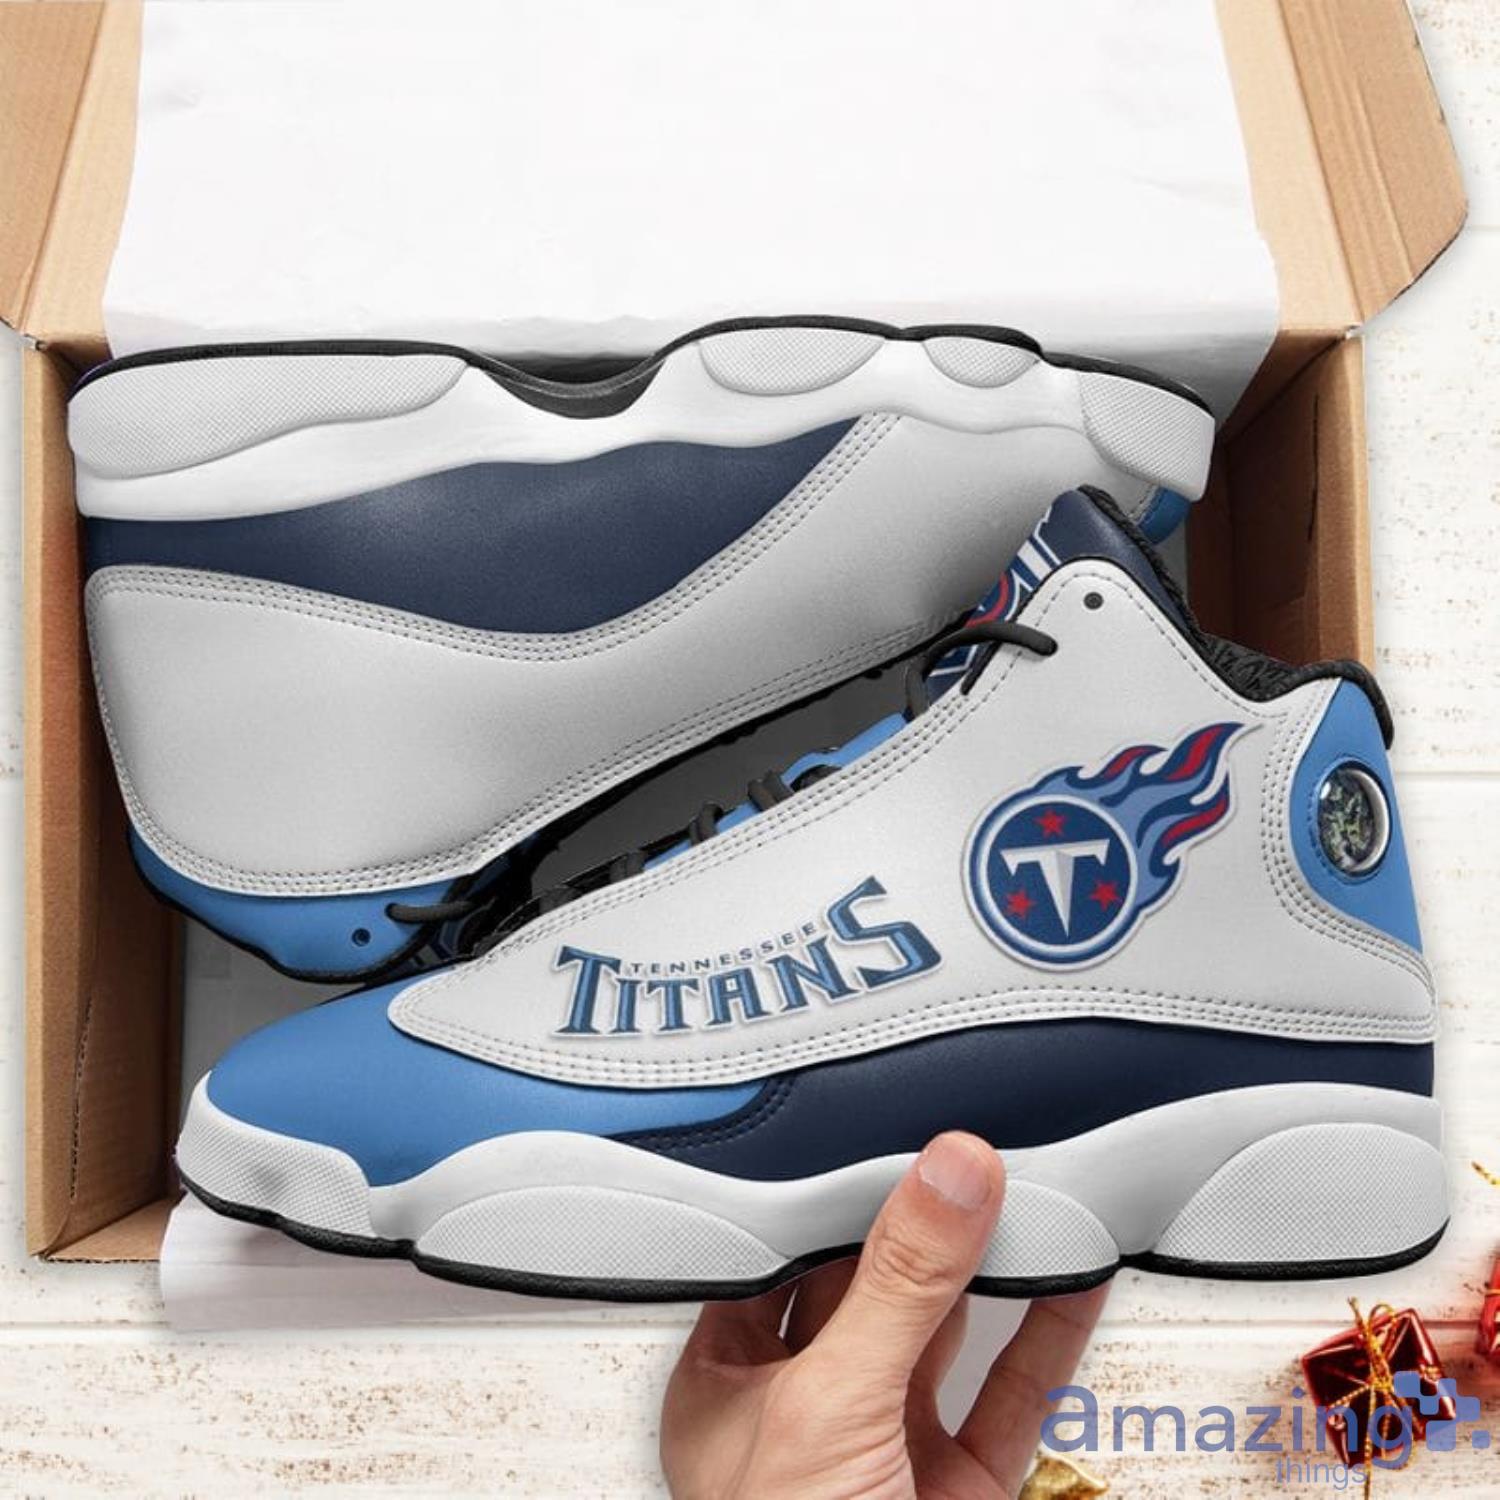 Tennessee Titans NFL Personalized Air Jordan 13 Sport Shoes - Growkoc